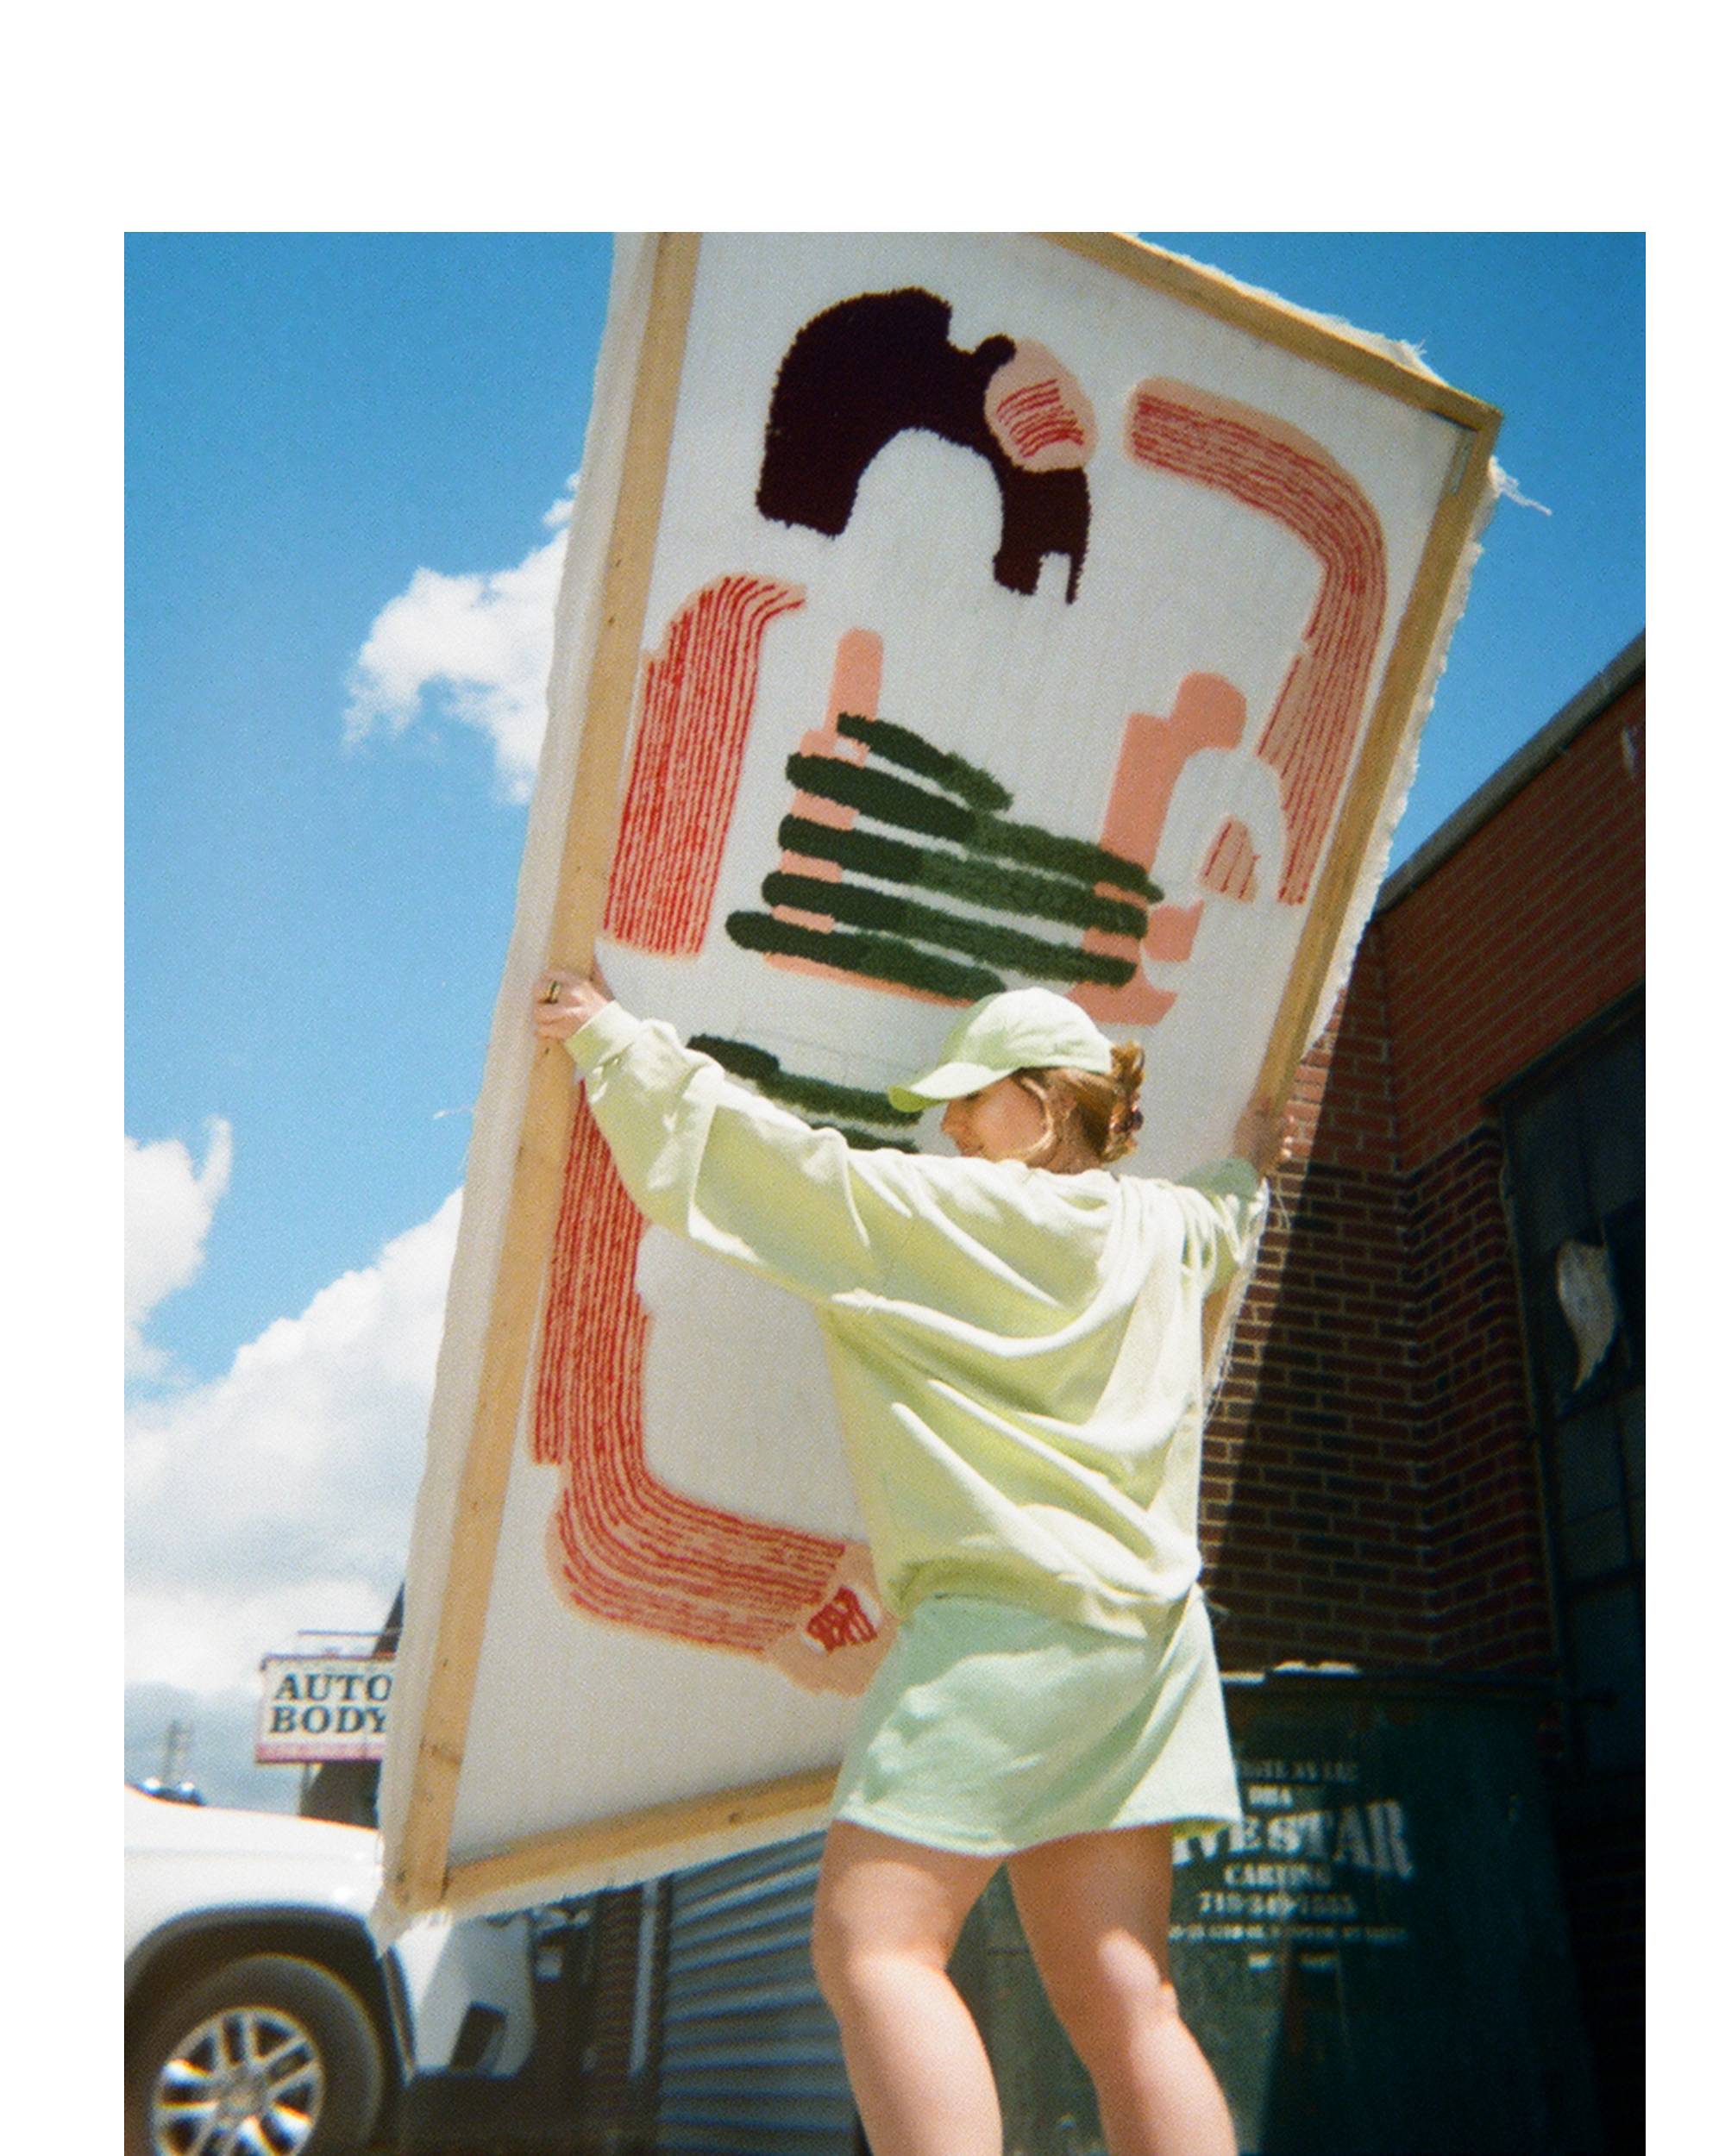 Caroline Kaufman wearing a levis outfit holding a large framed artwork